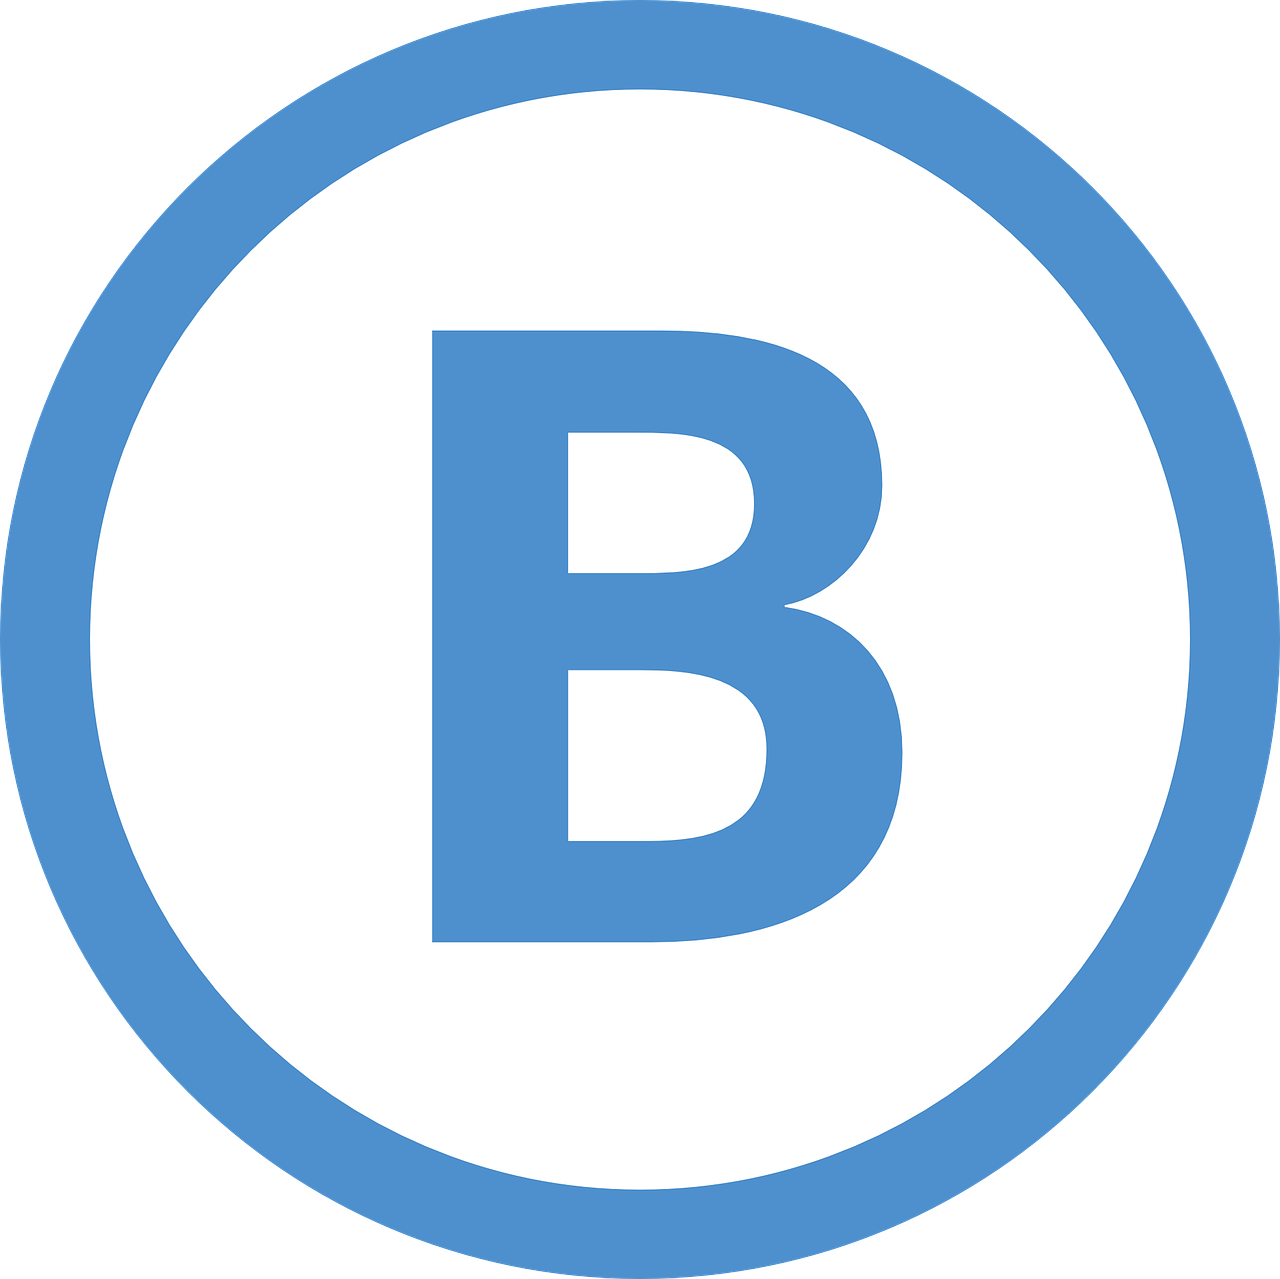 b sign symbol free photo